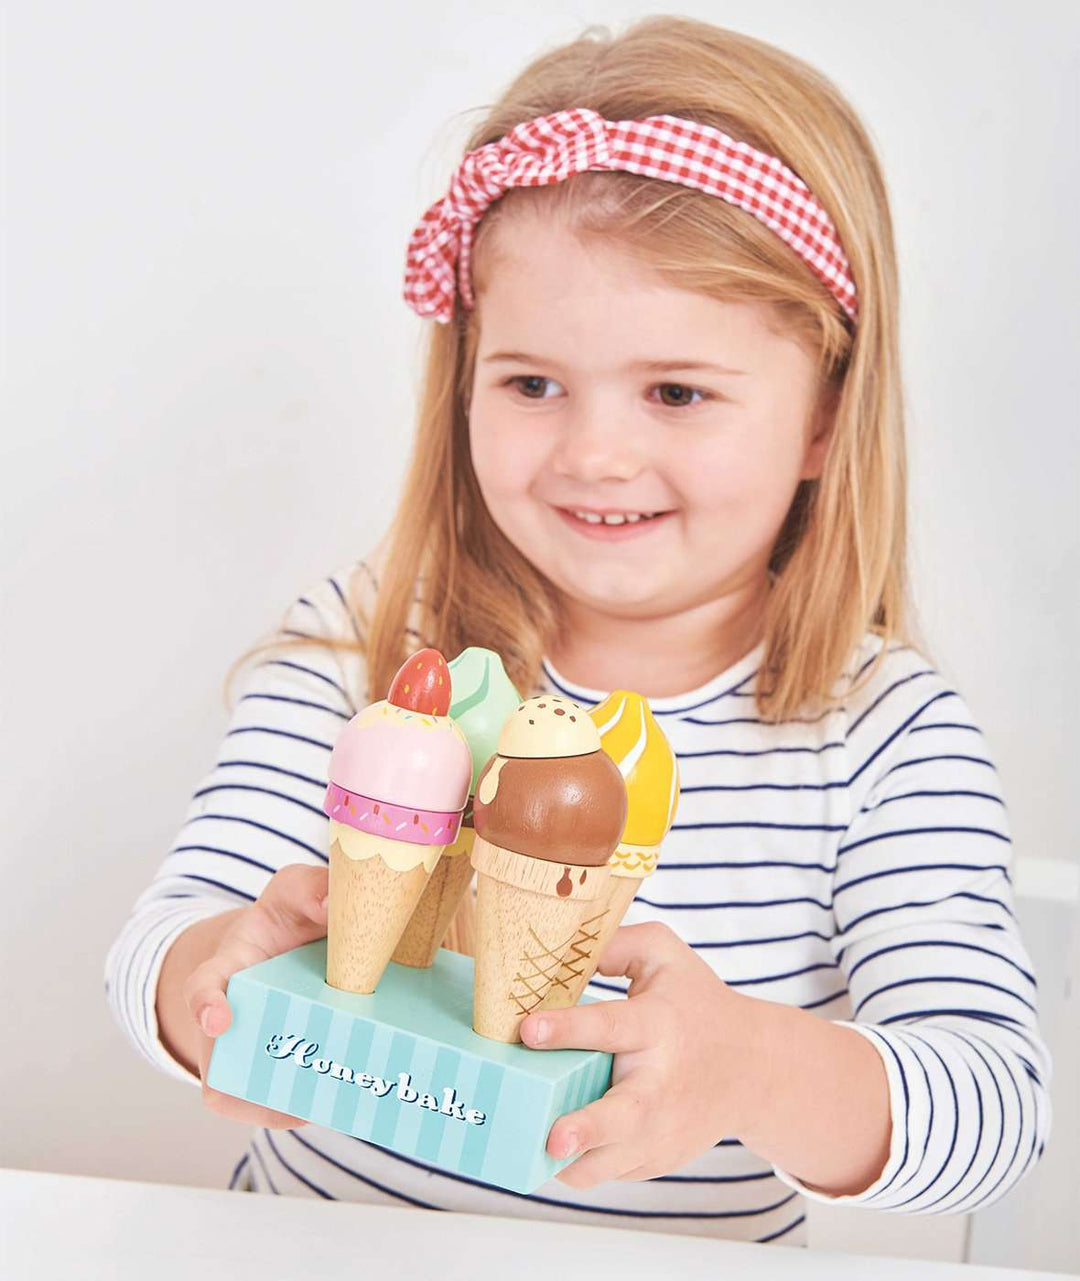 Le Toy Van - Honeybake Wooden Ice Creams - All Mamas Children